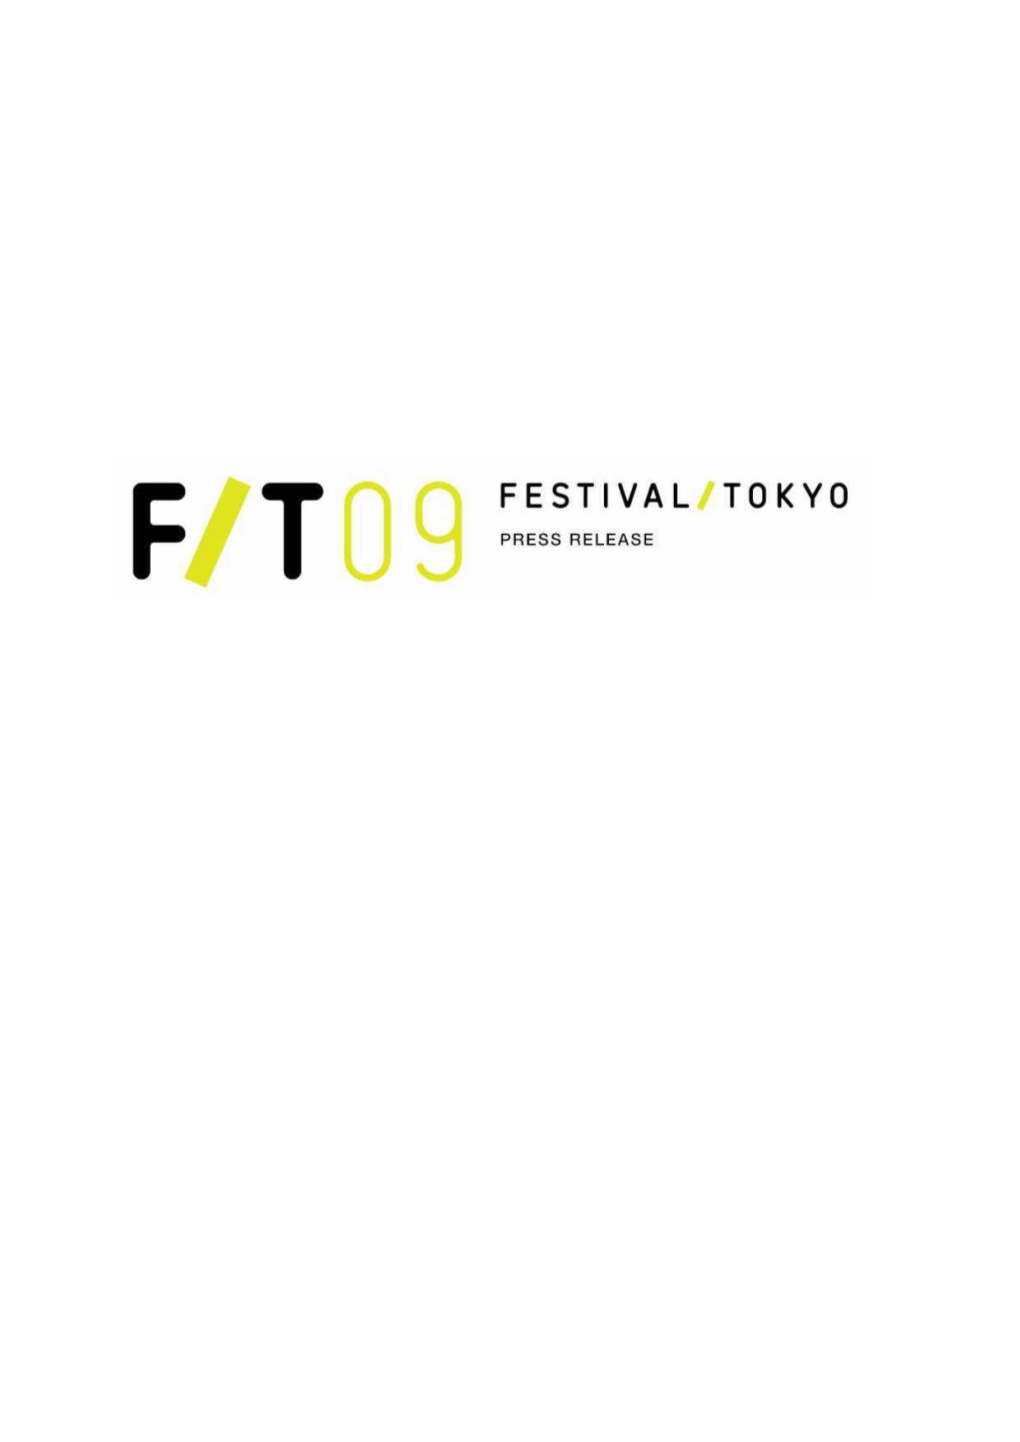 Festival/Tokyo Press Release